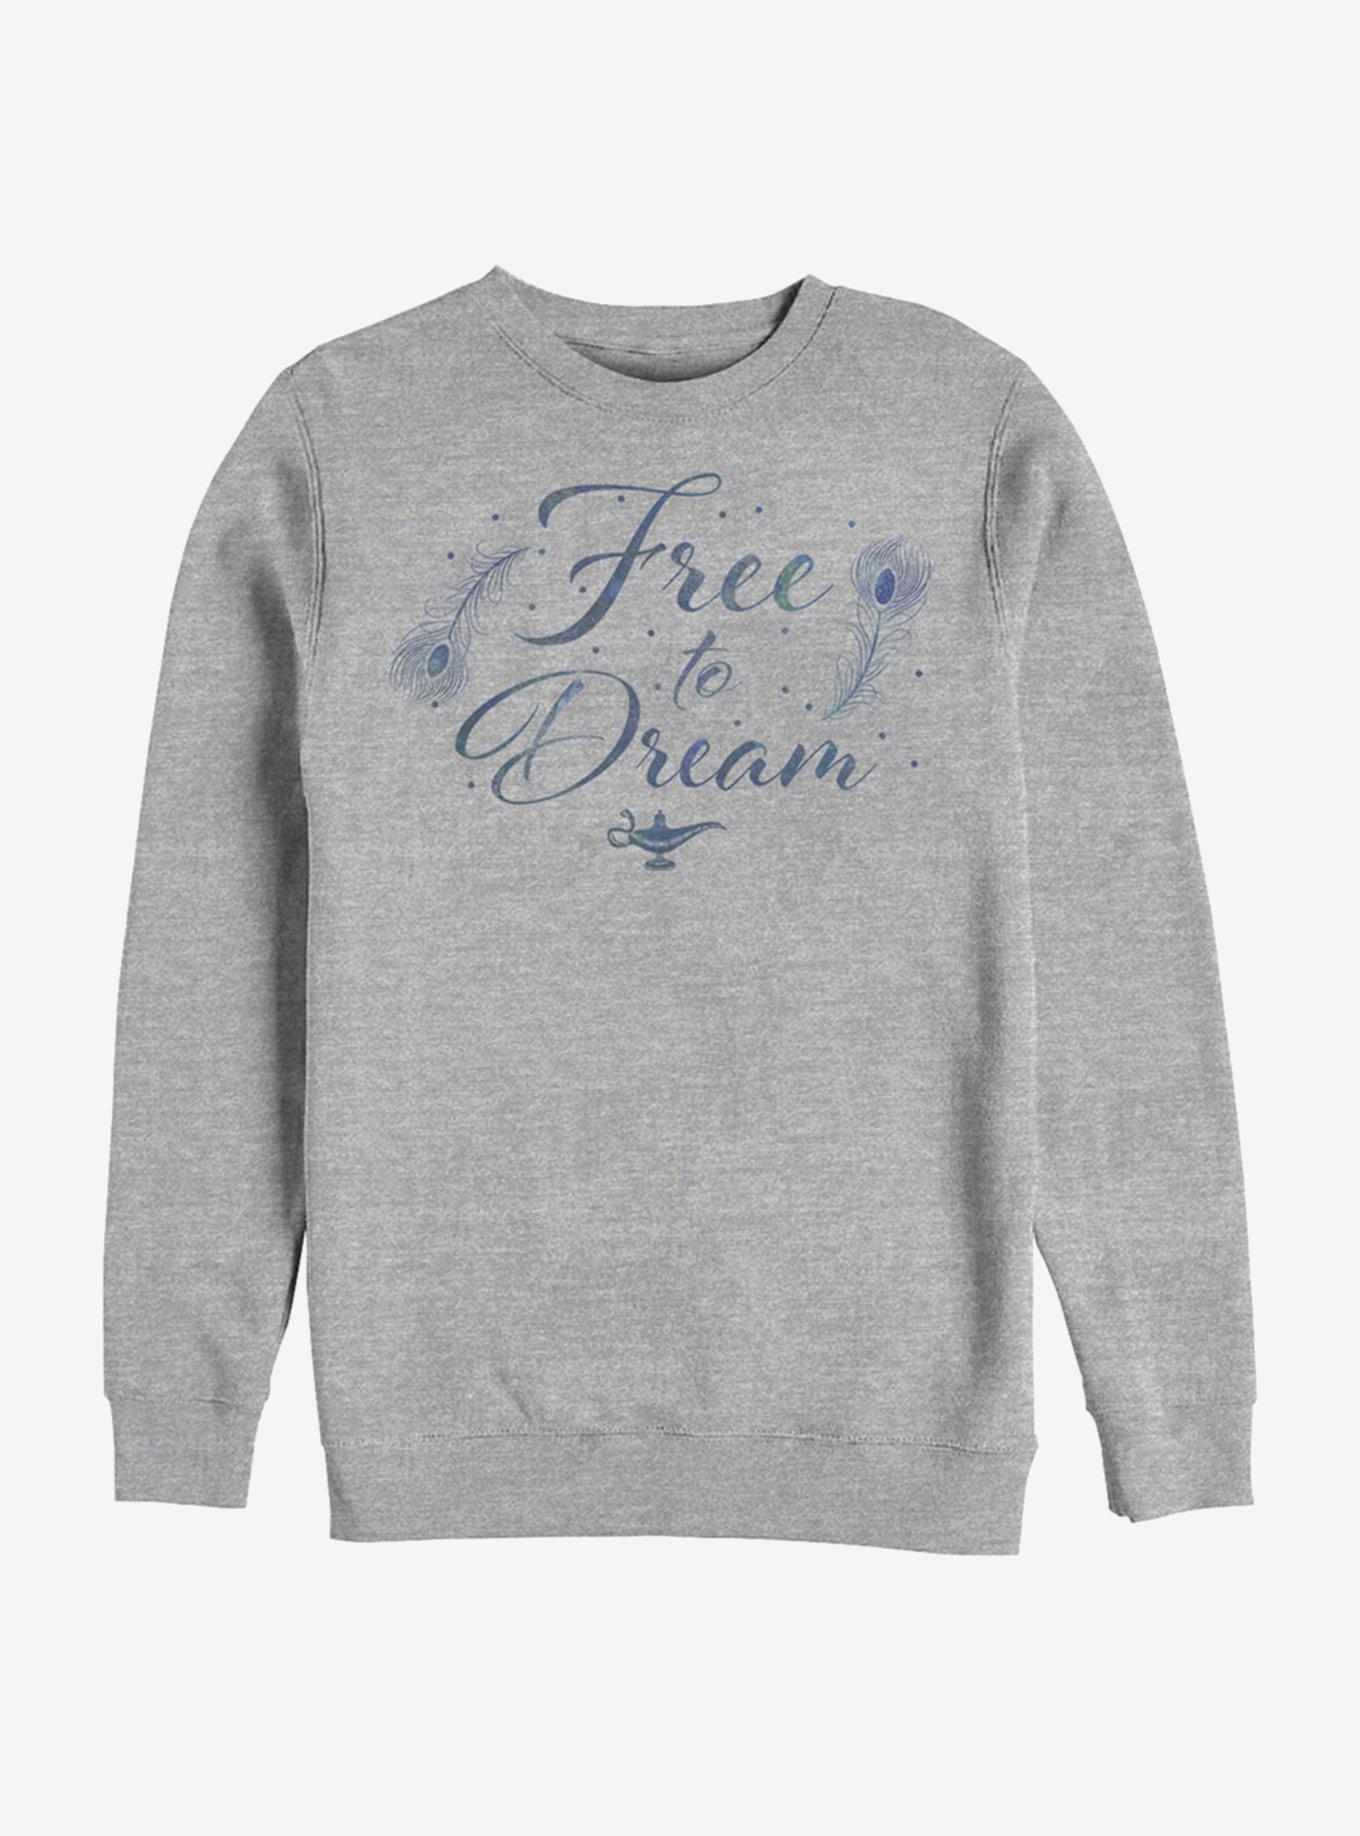 Disney Aladdin 2019 Free To Dream Sweatshirt, ATH HTR, hi-res